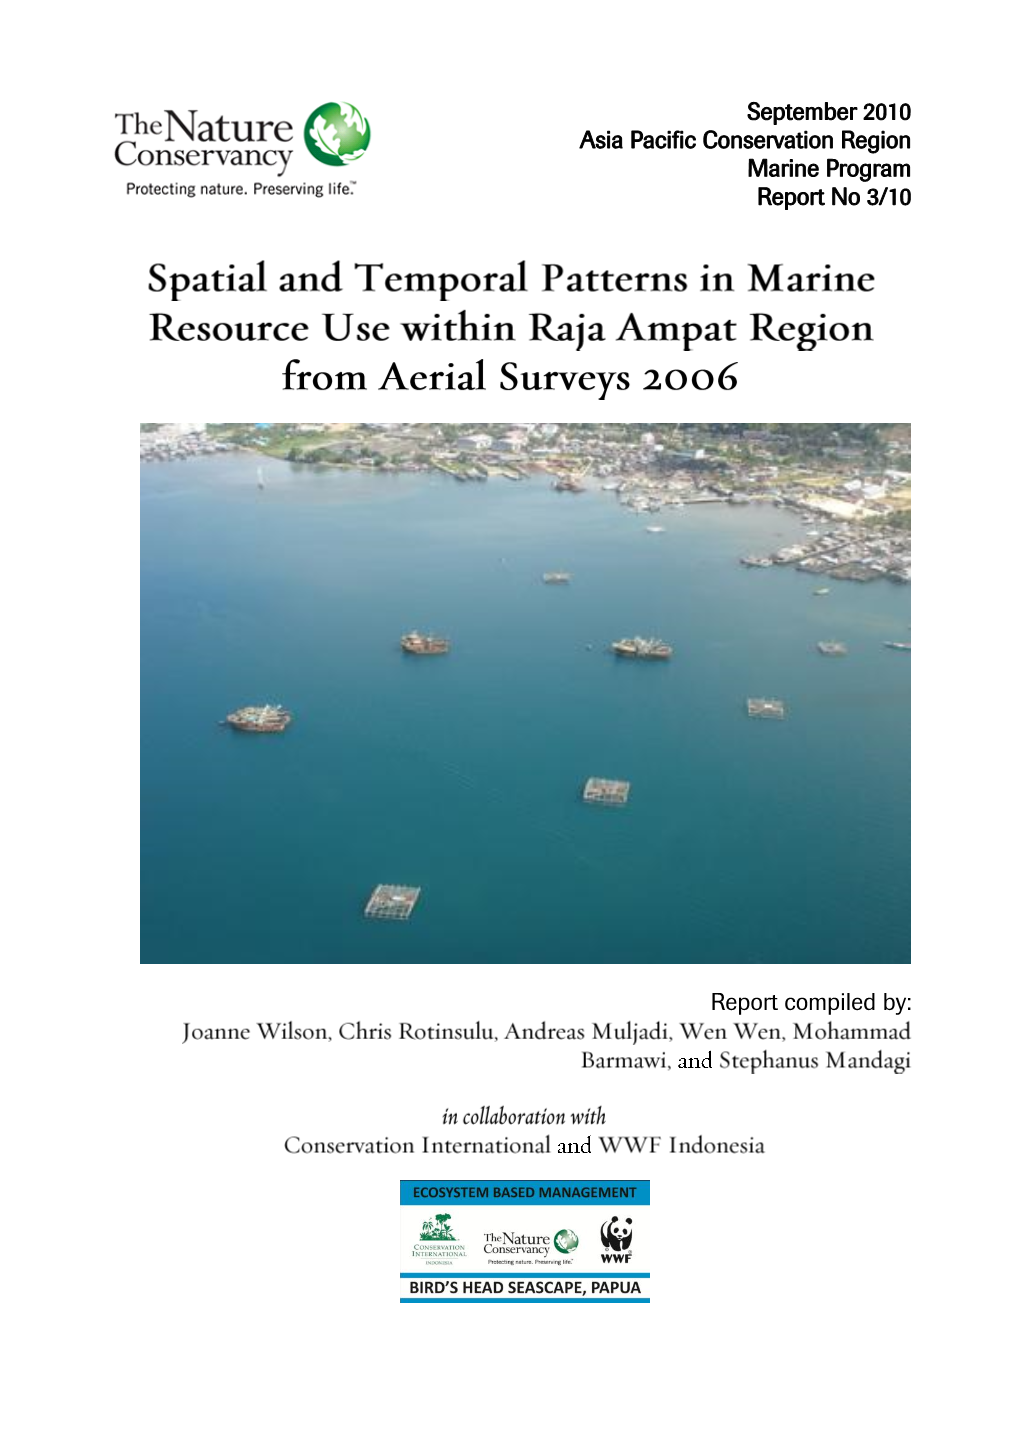 September 2010 Asia Pacific Conservation Region Marine Program Report No 3/10